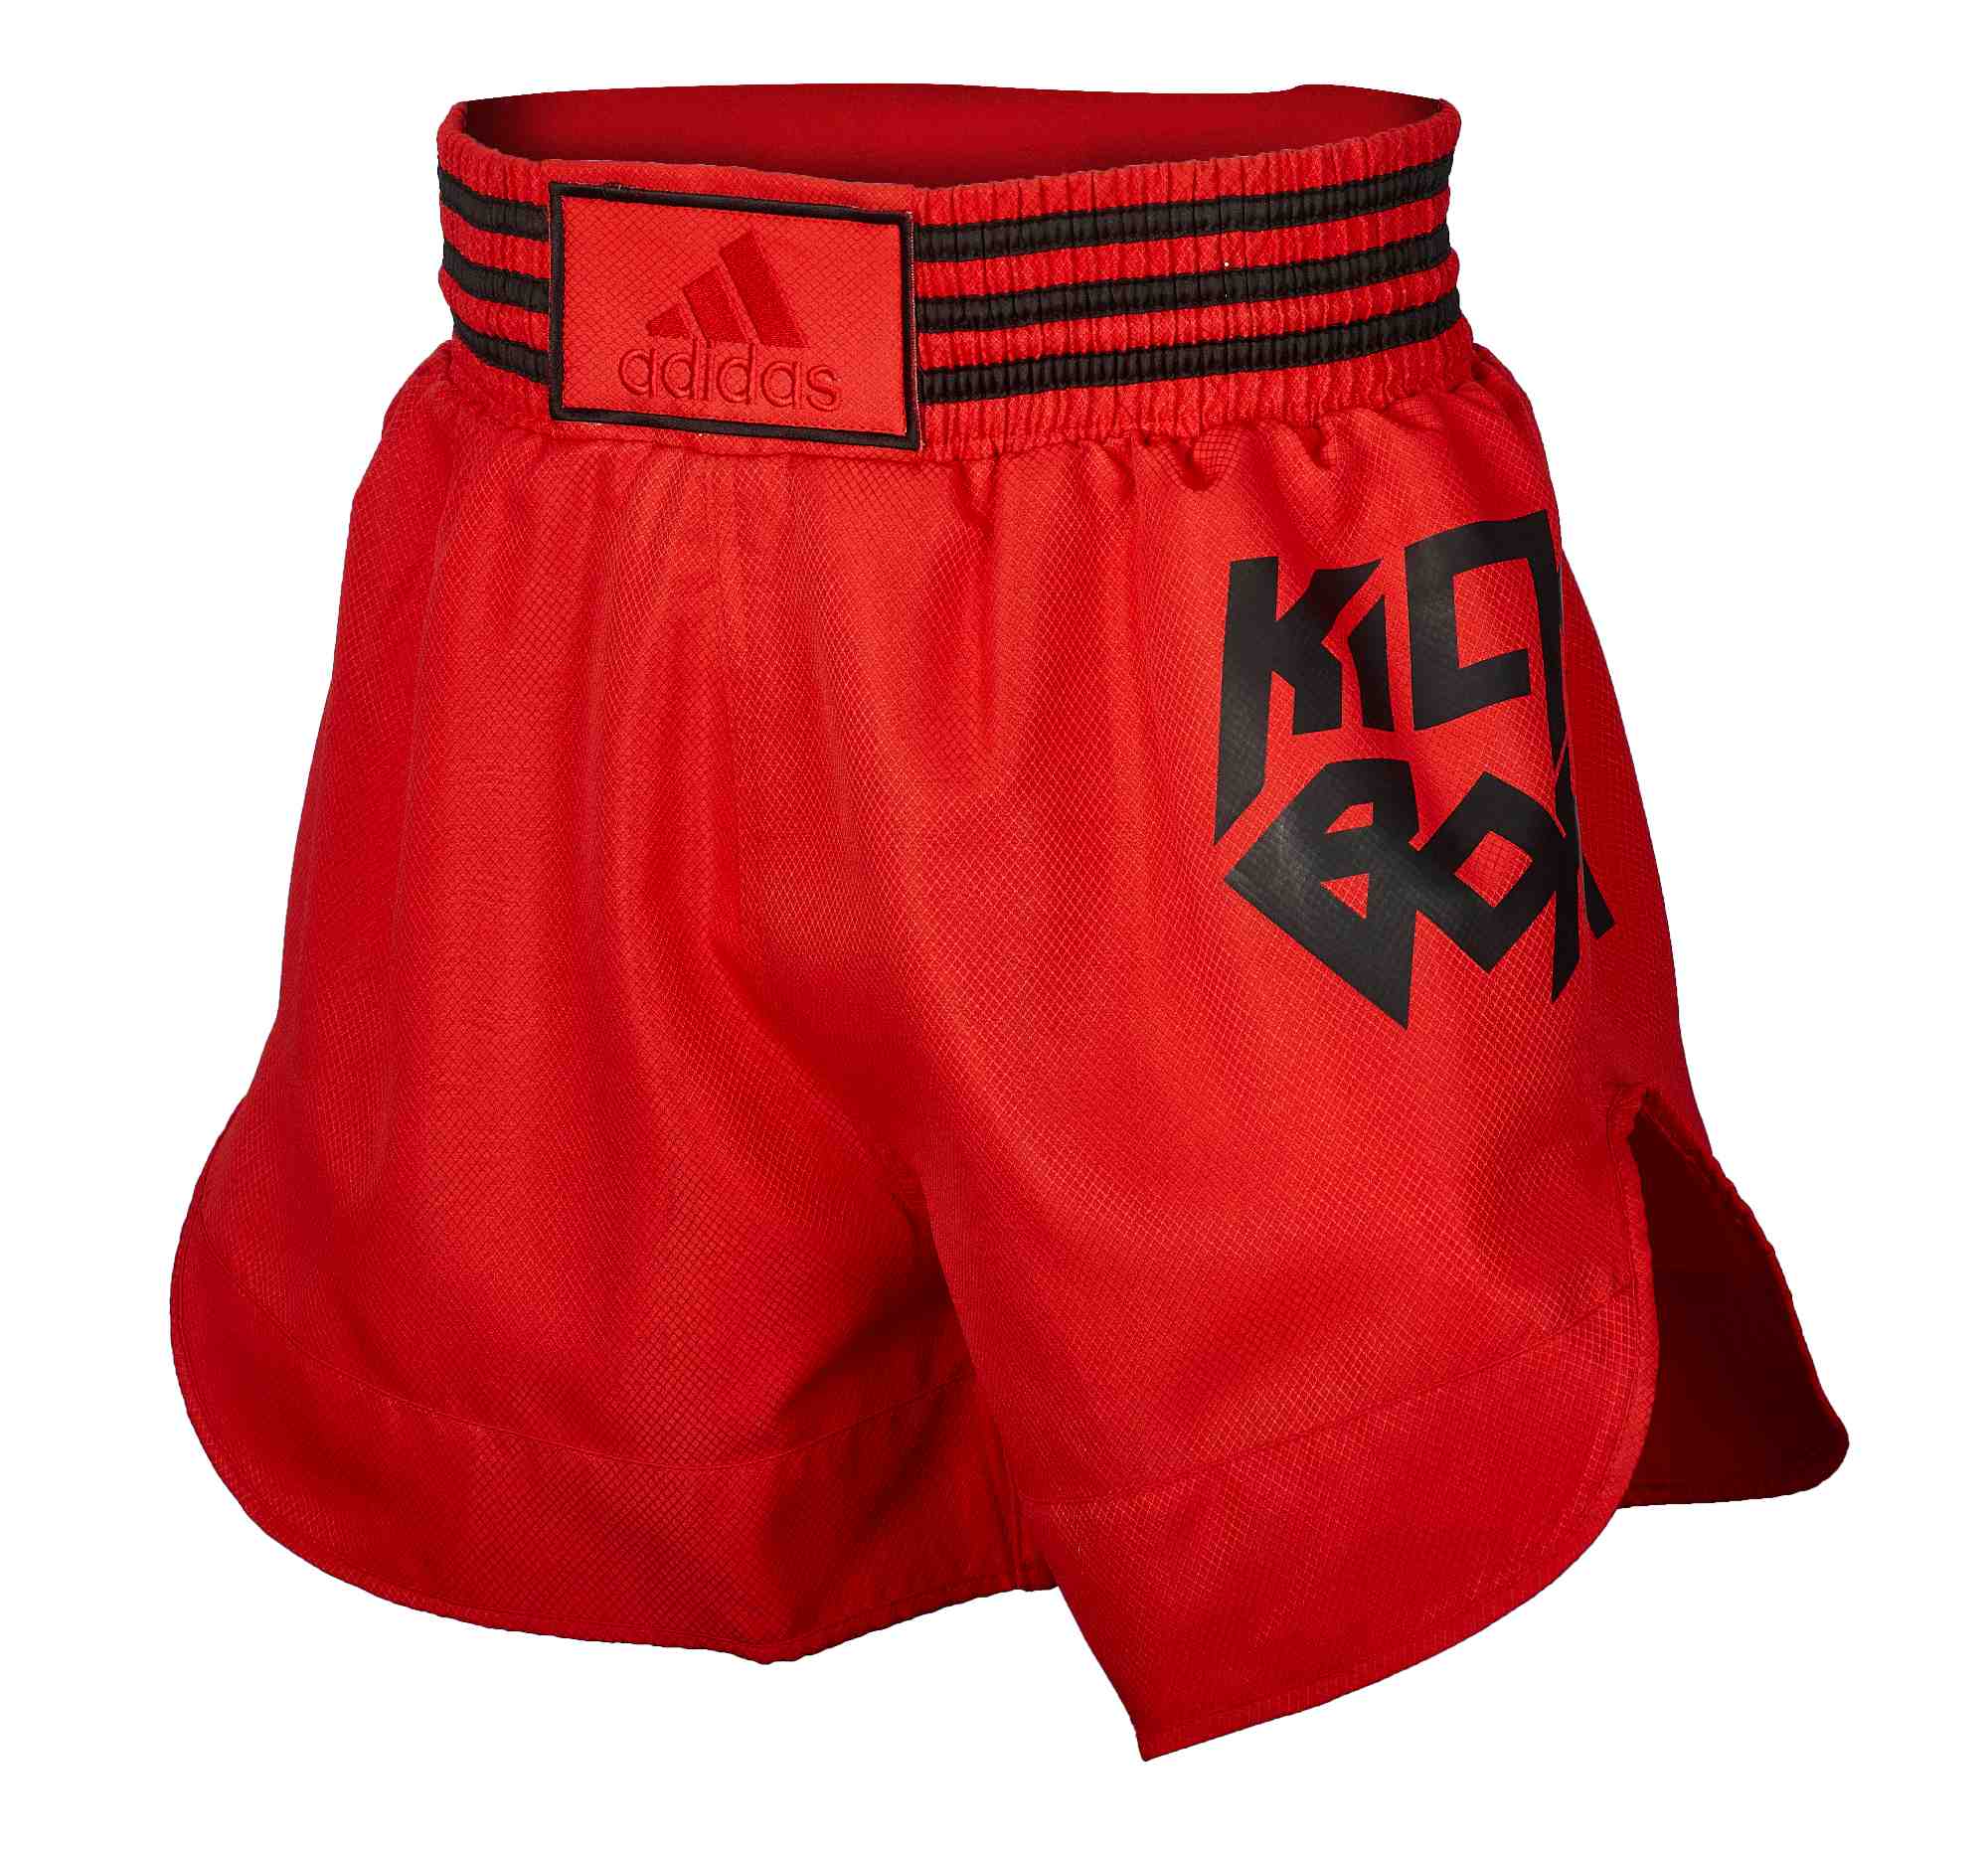 adidas Kick Boxing Shorts ADISKB02 red/black